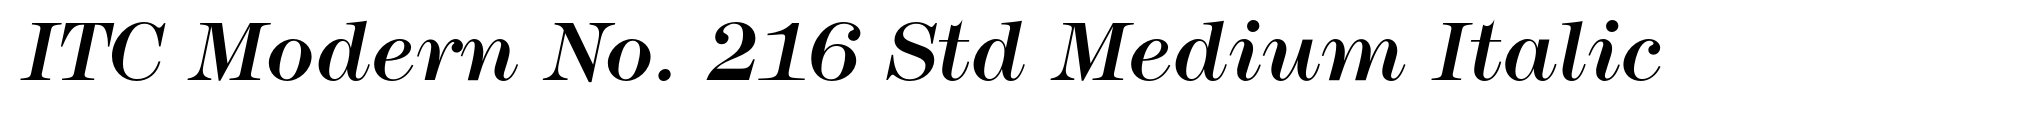 ITC Modern No. 216 Std Medium Italic image